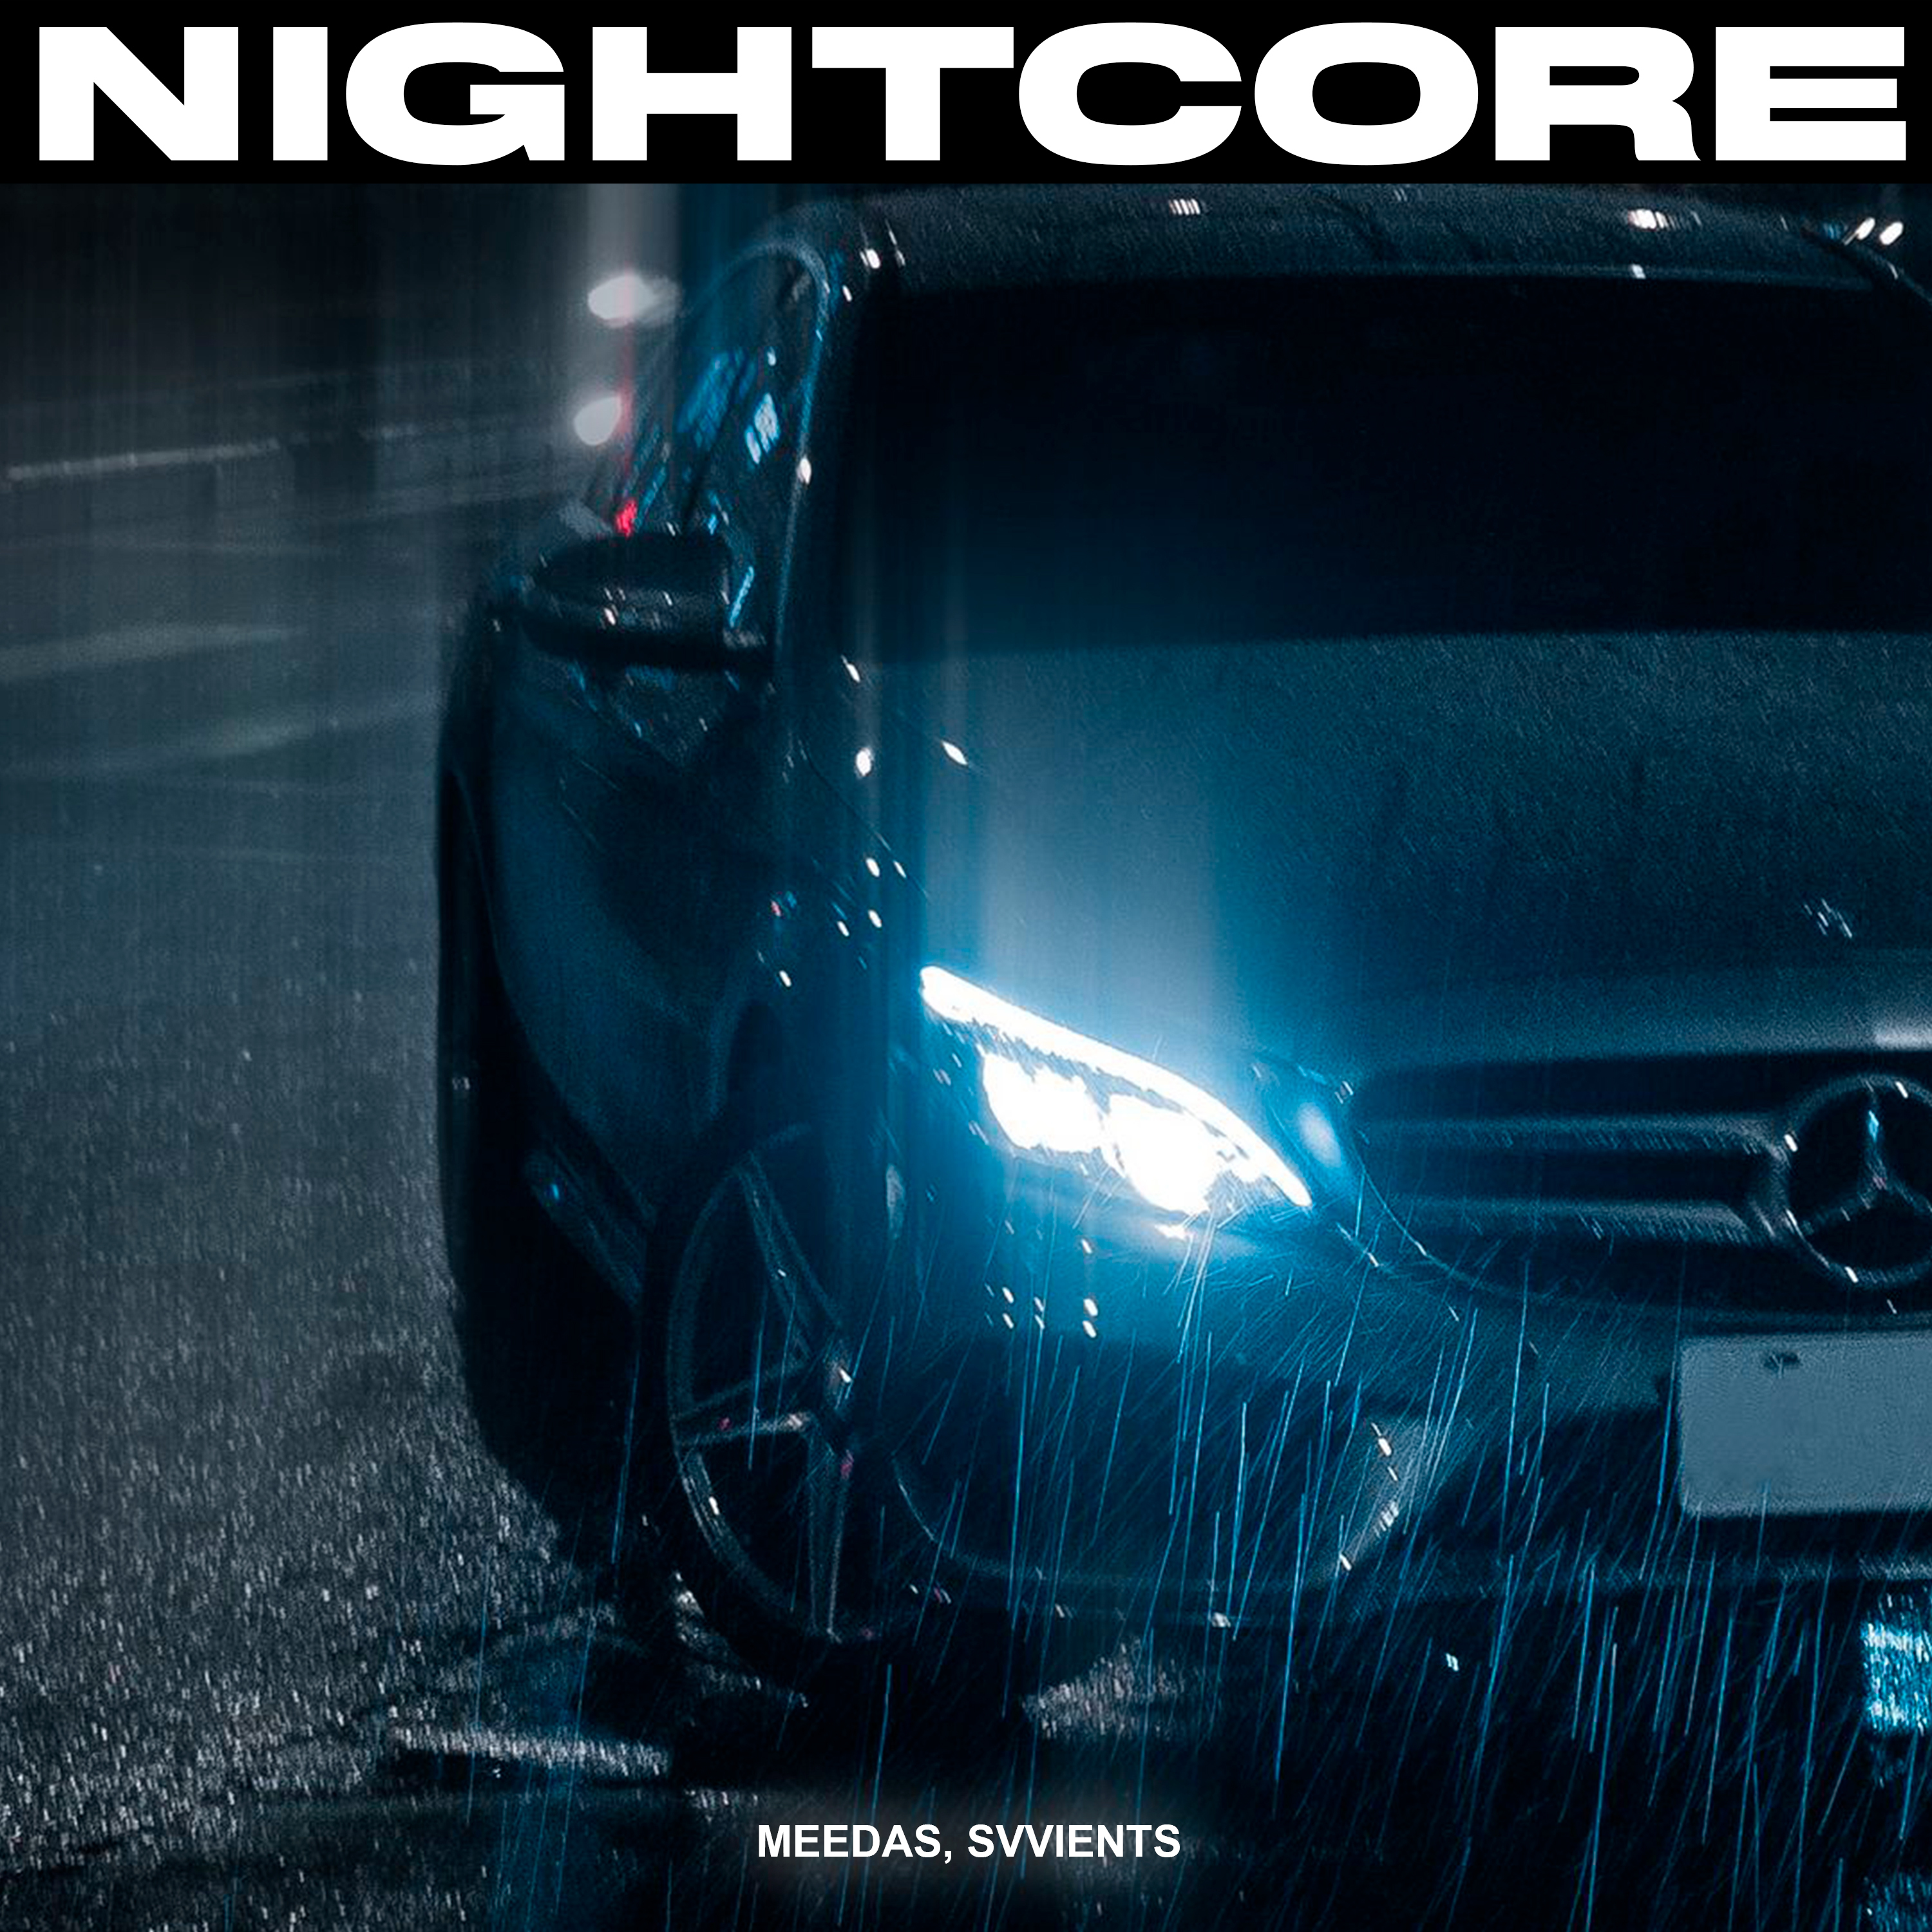 डाउनलोड करा Nightcore